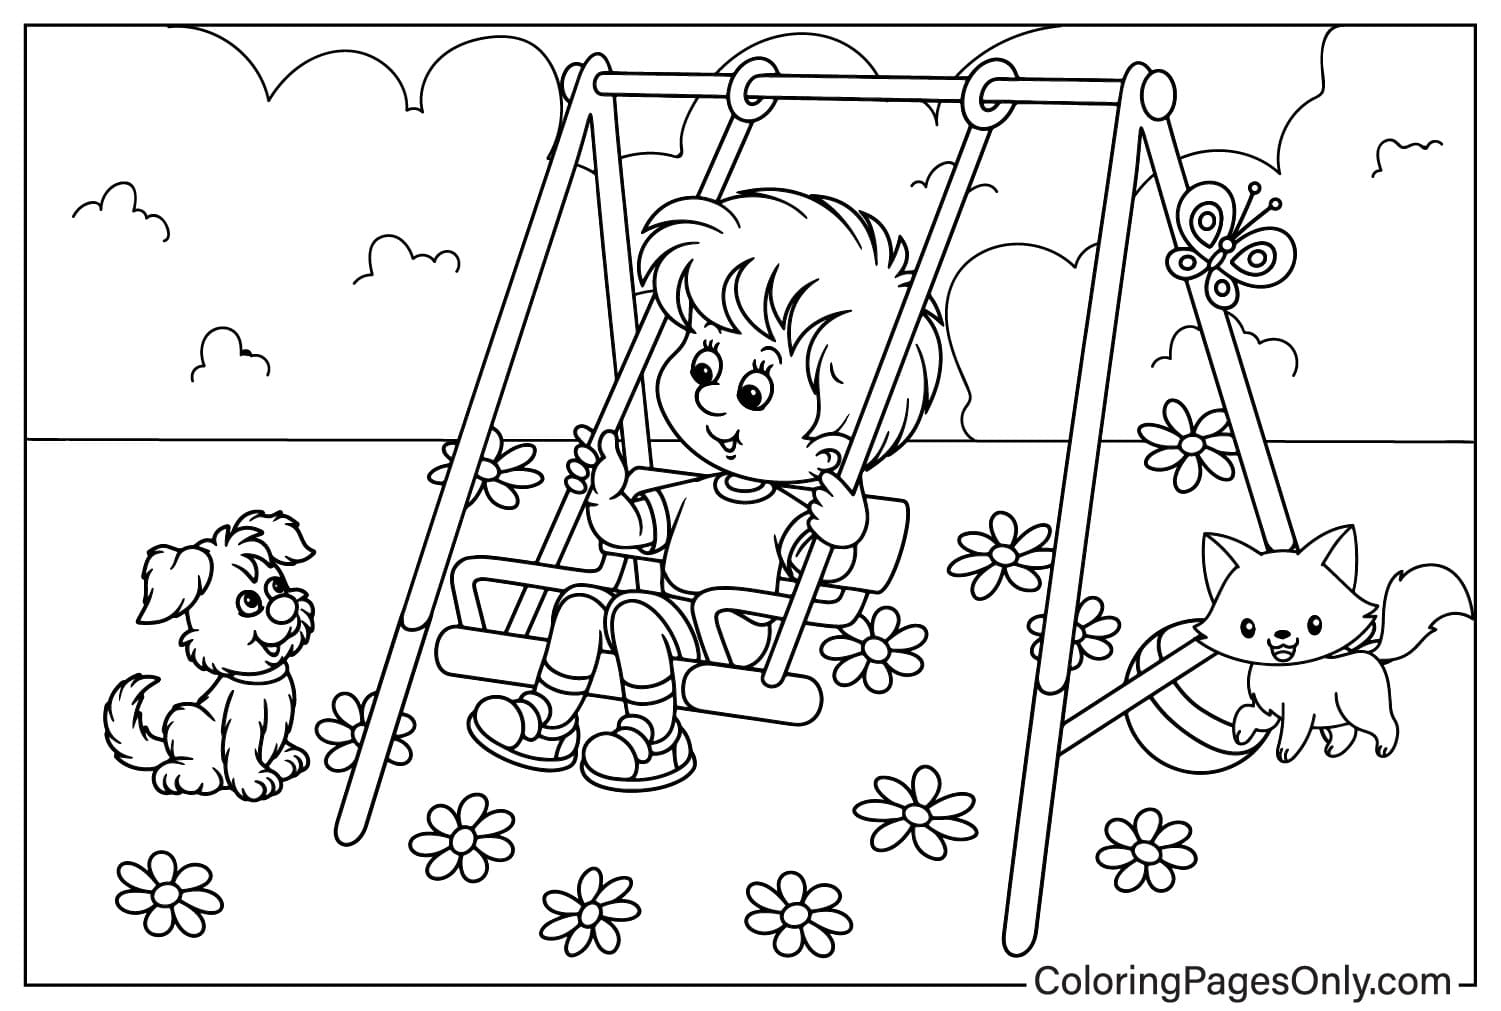 Imprimir página para colorir do Playground no Playground